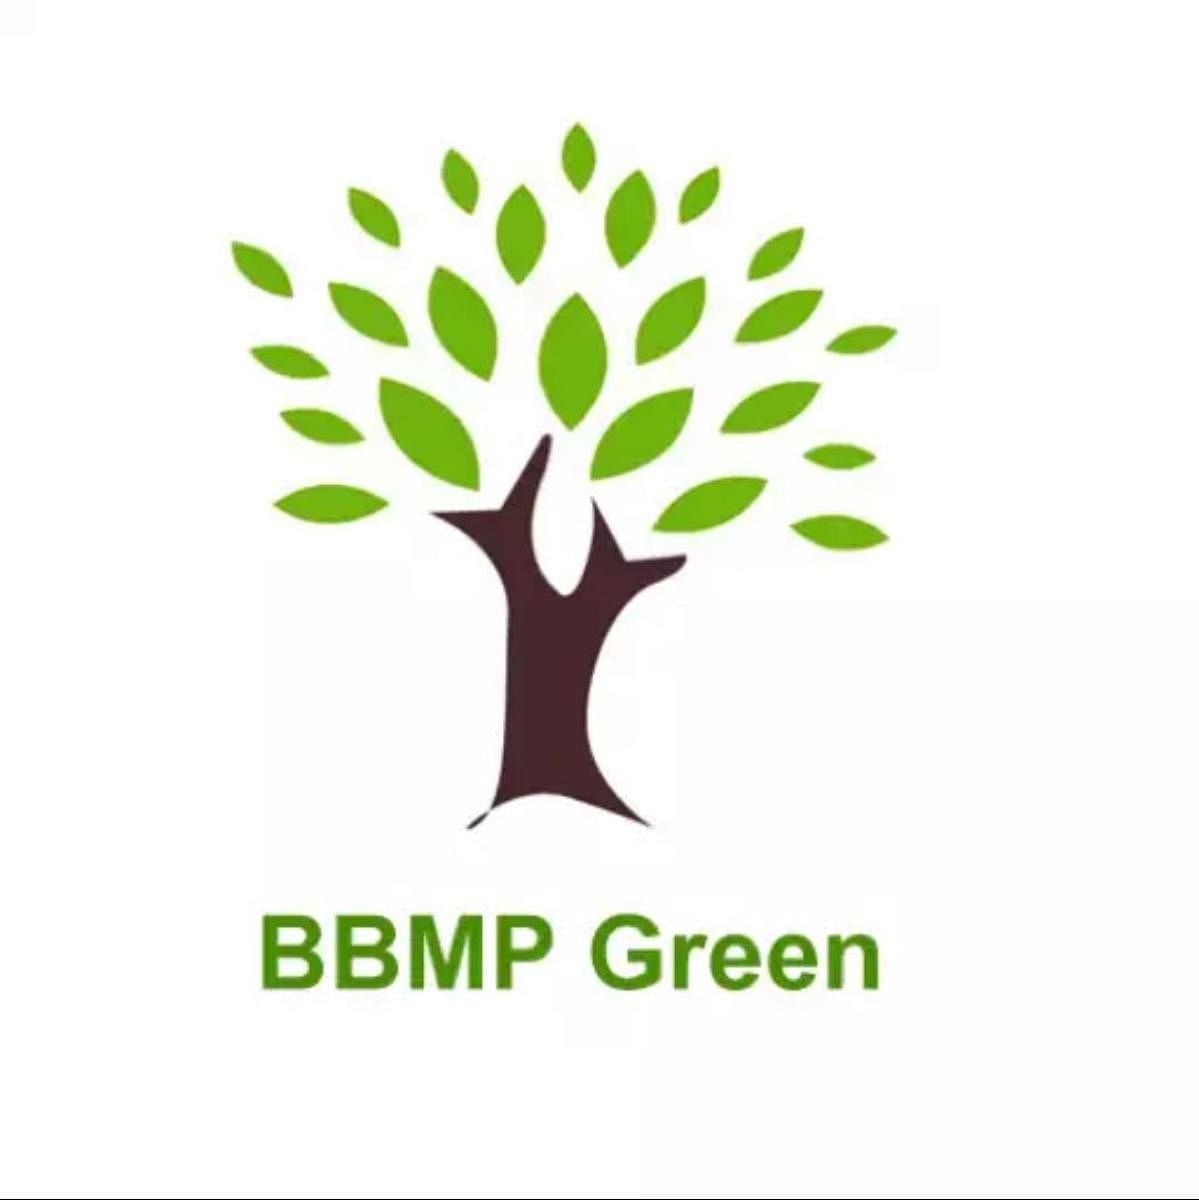 BBMP Green app logo